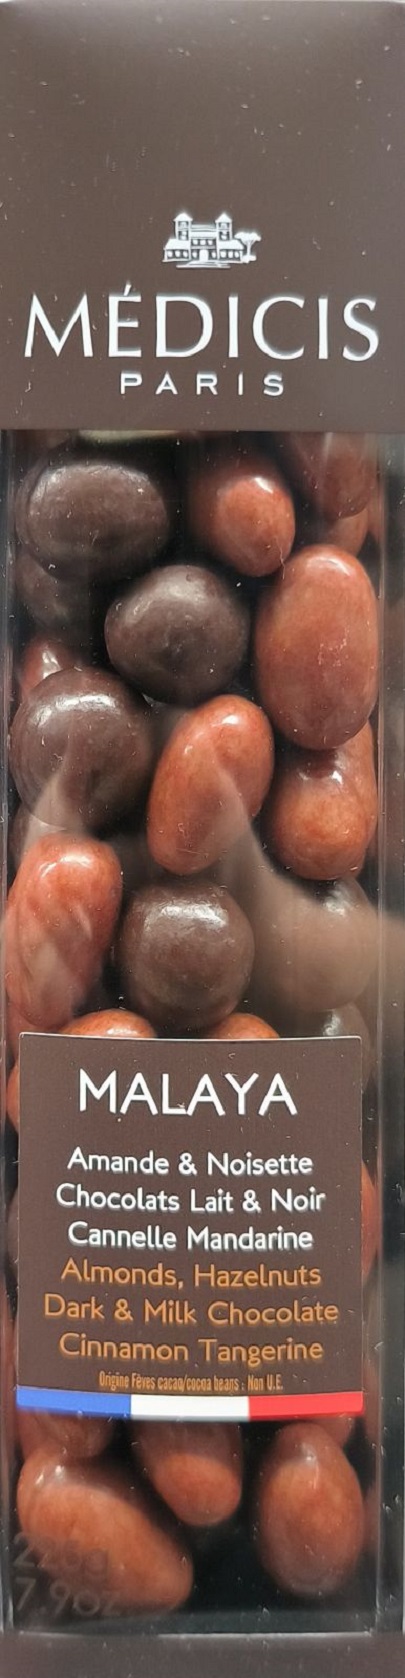 Bomboane cu migdale si alune glazurate in ciocolata - Malaya 225g | Medicis